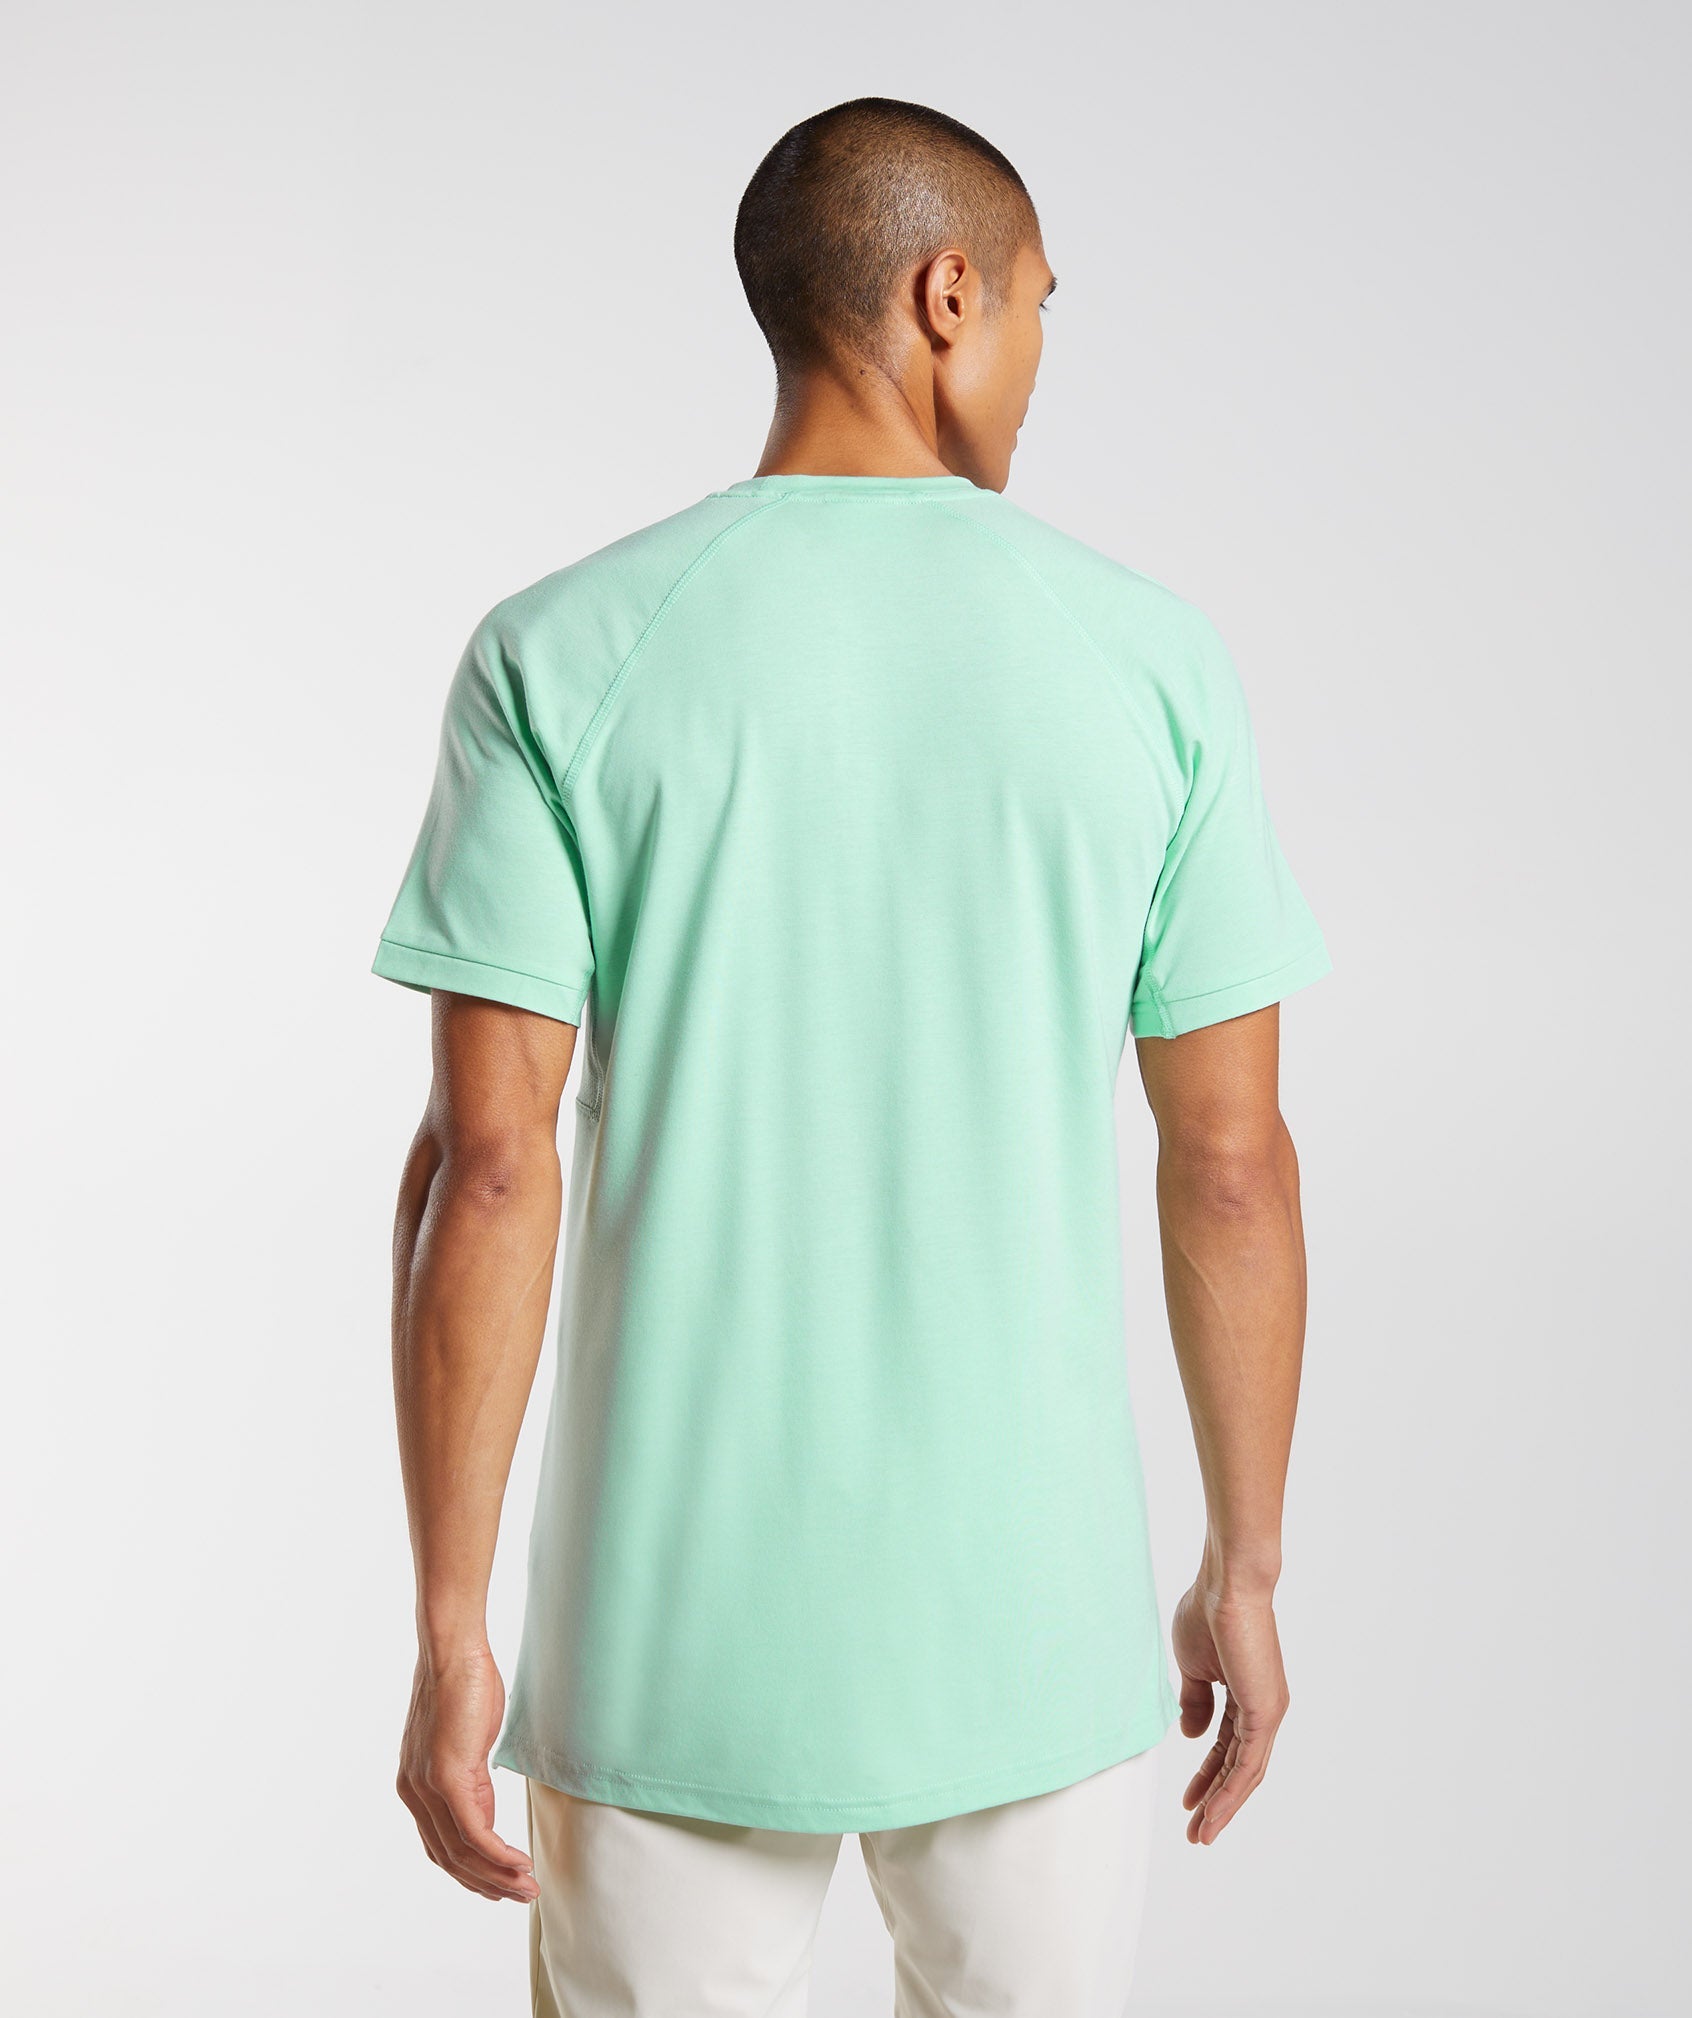 Studio T-Shirt in Pastel Green - view 2